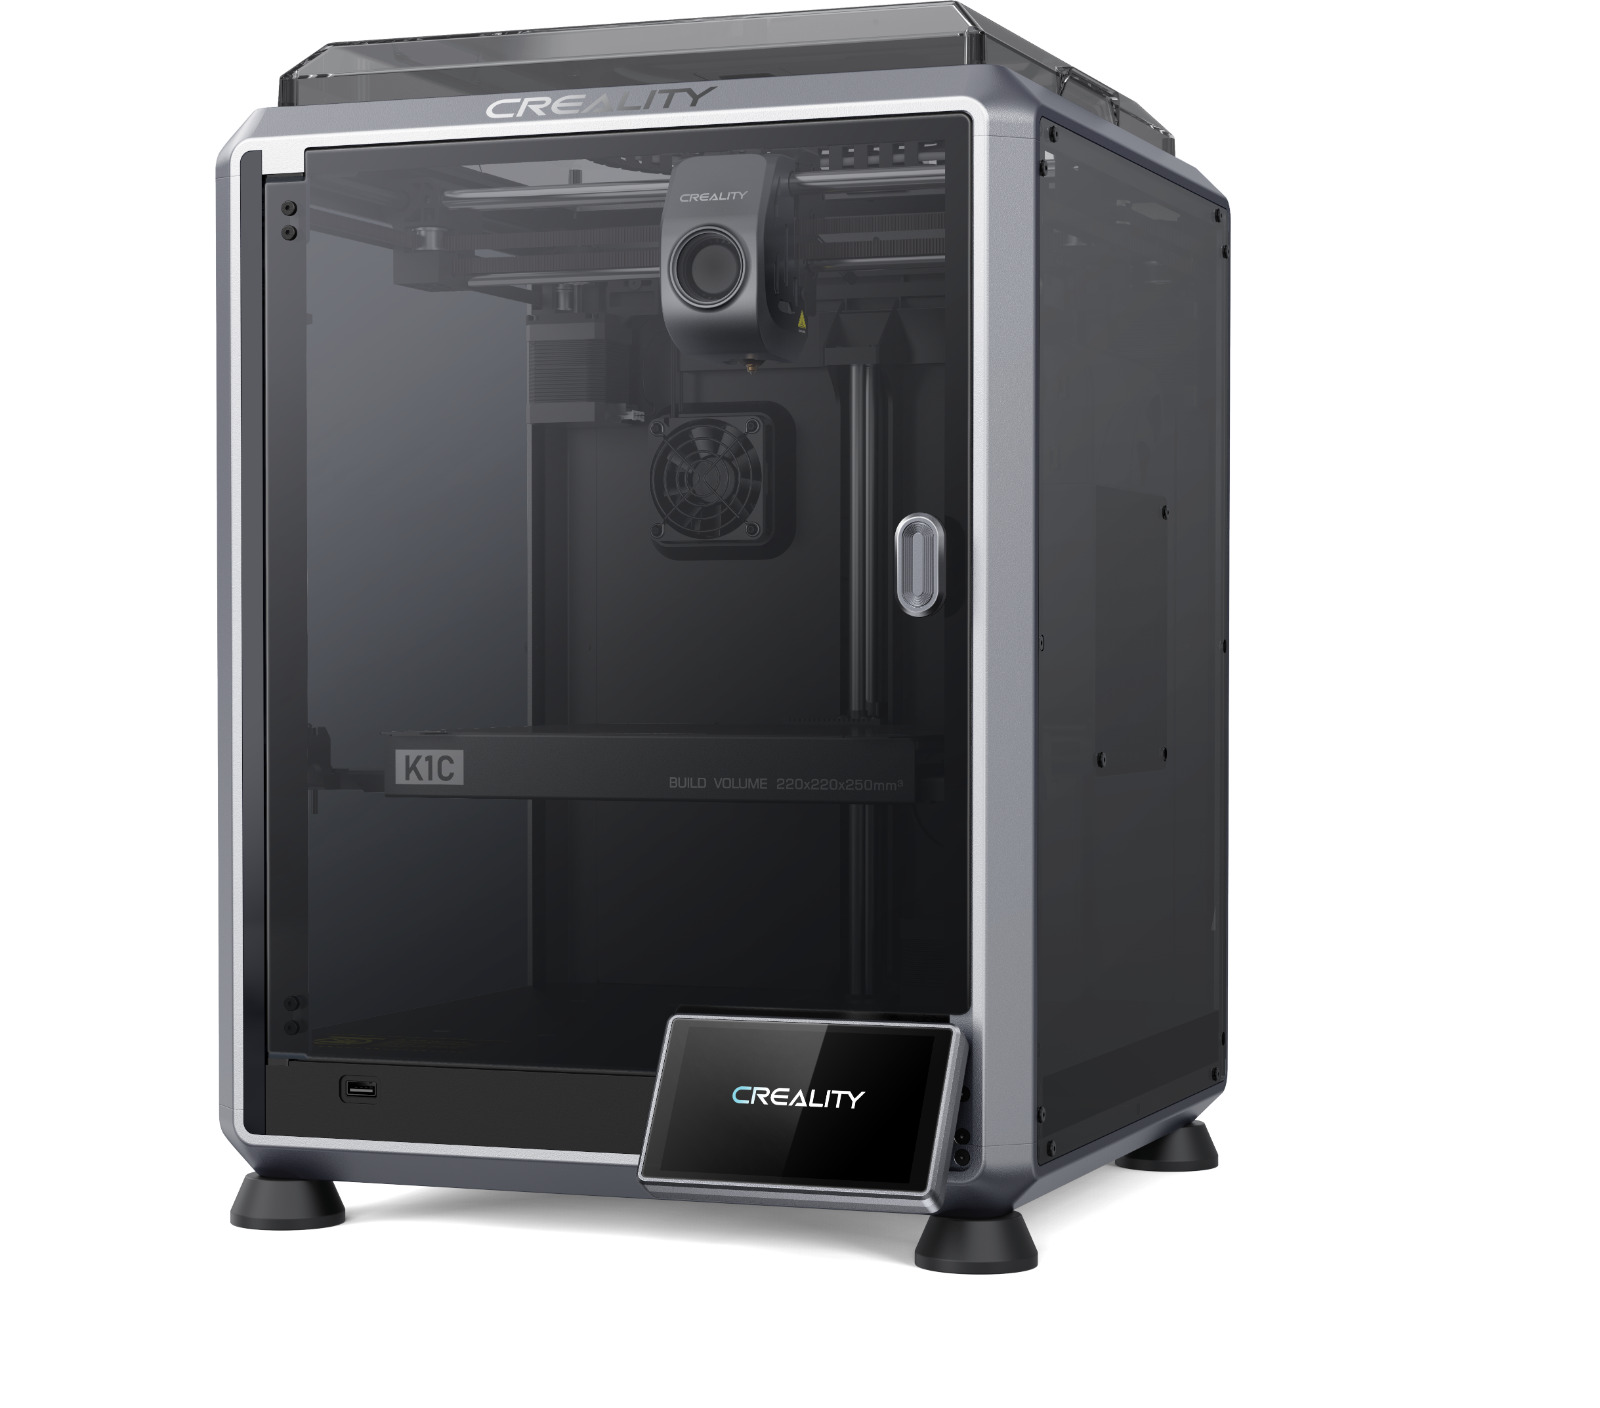 Creality K1C-High-Speed 3D Printer, Auto-Leveling, AI Monitoring, Quality Prints